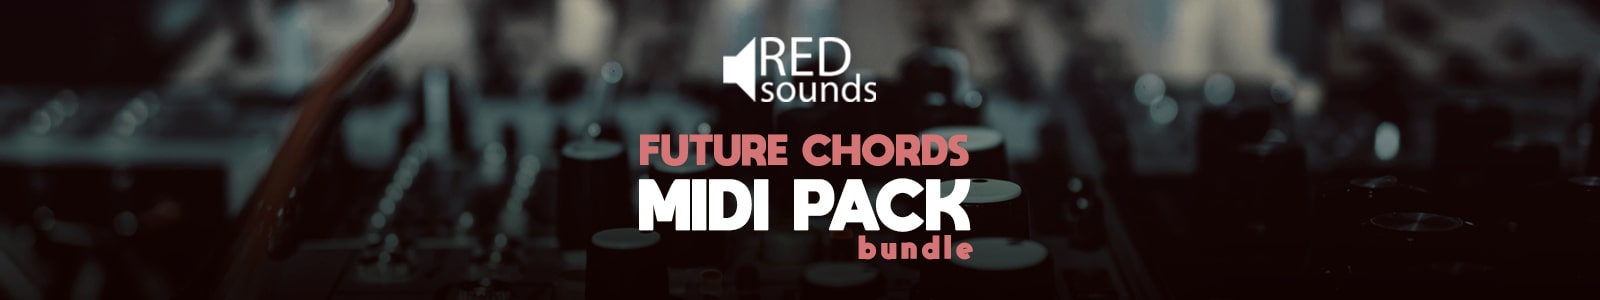 FUTURE CHORDS MIDI PACK